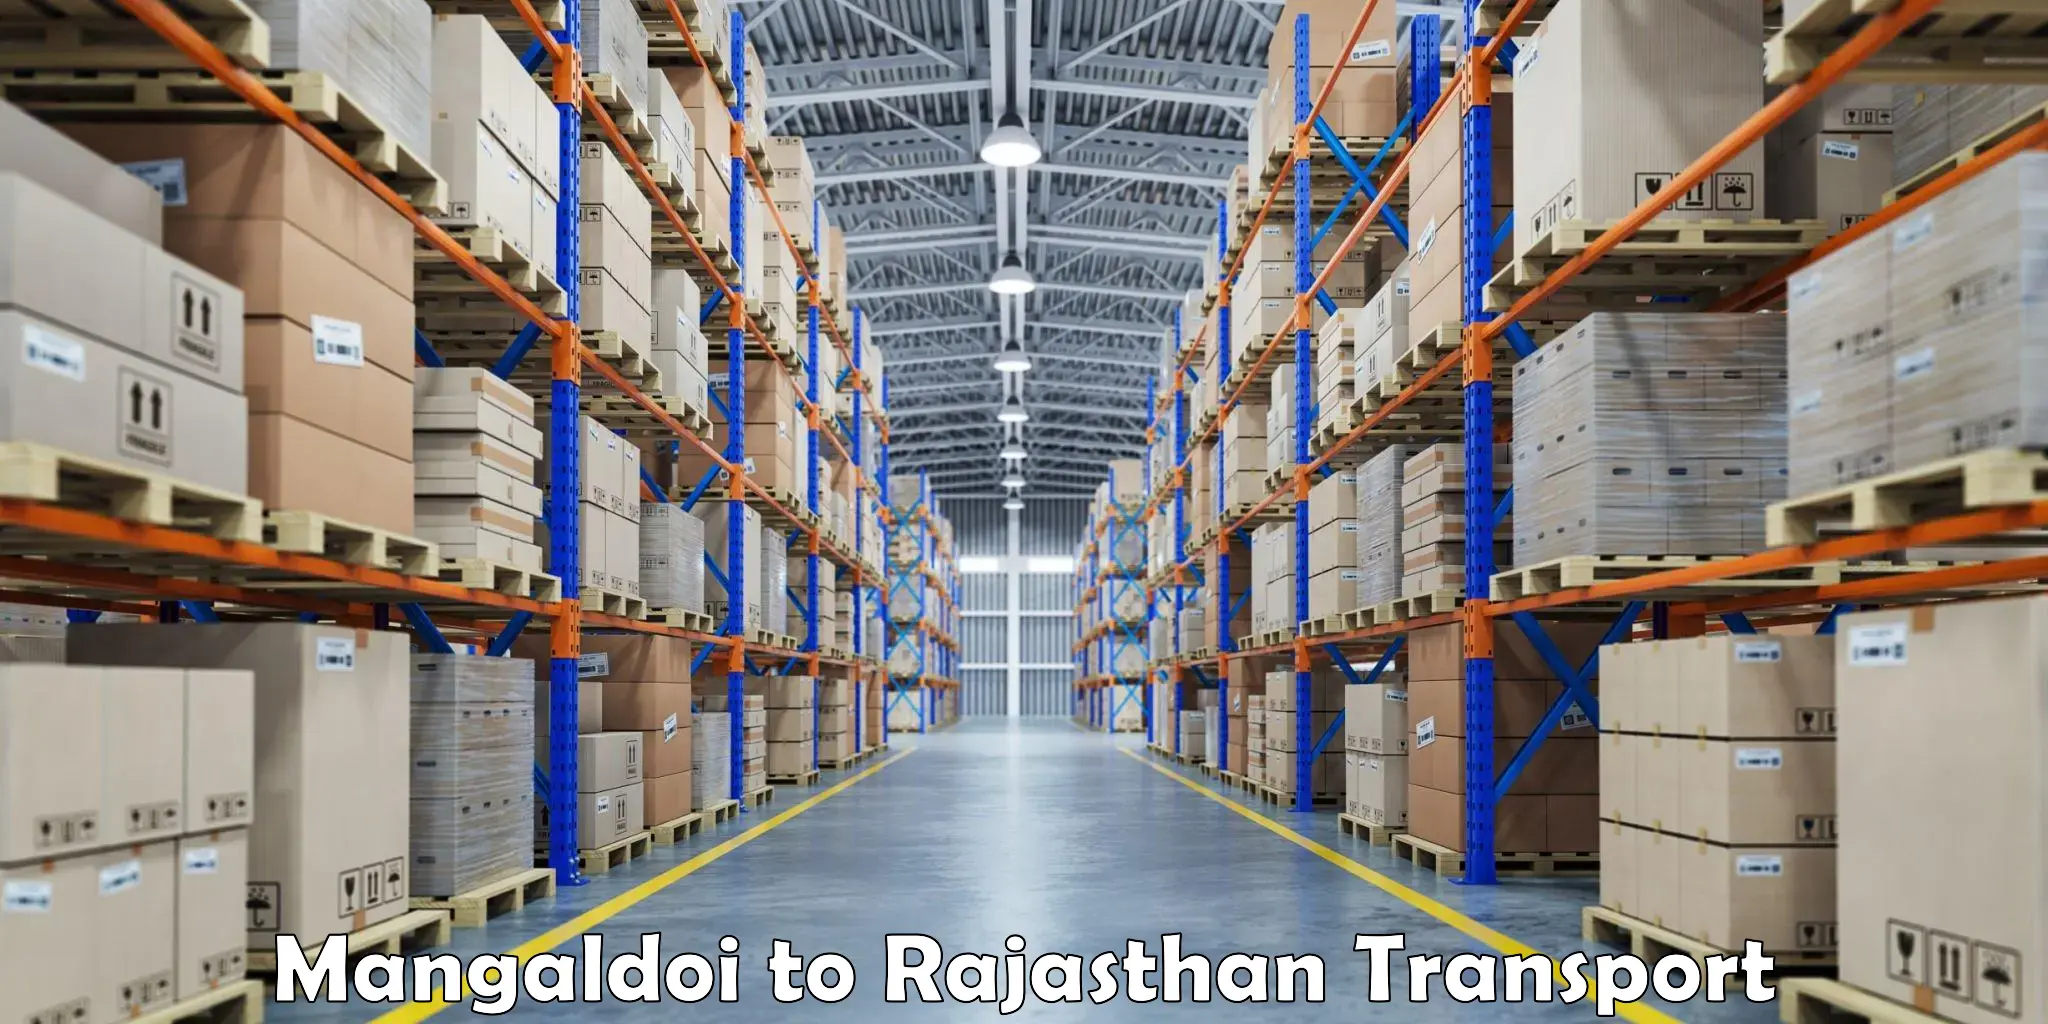 Truck transport companies in India Mangaldoi to Bagidora